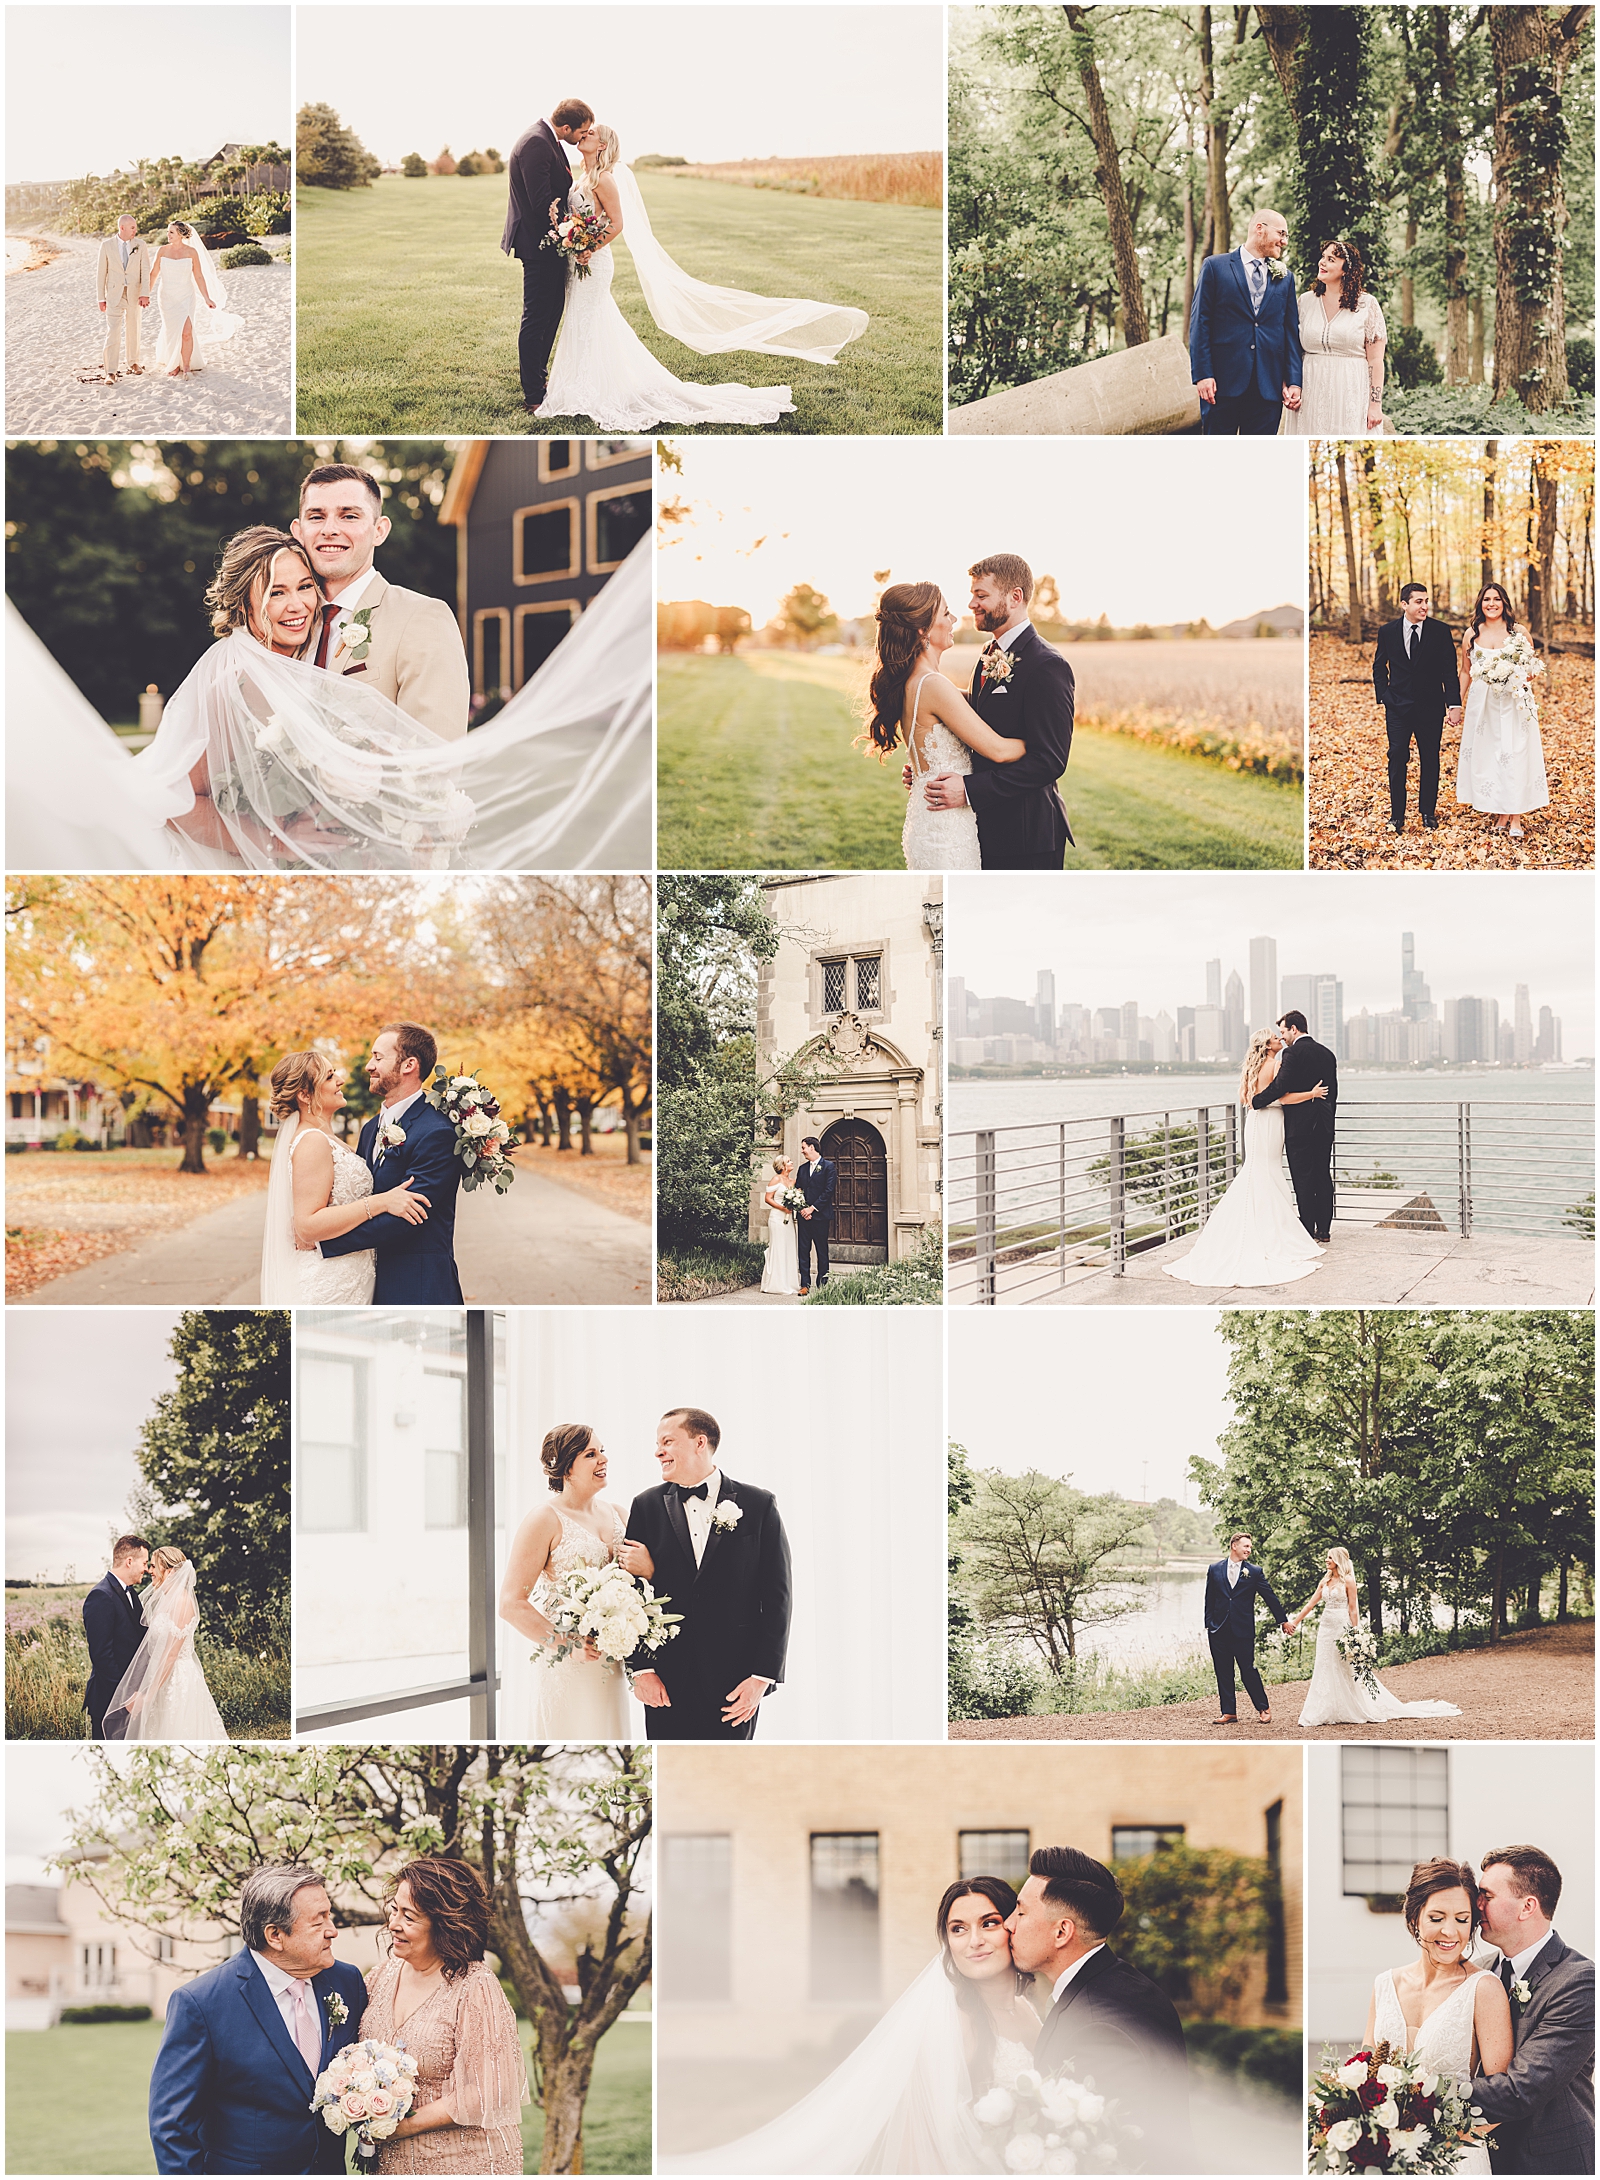 Chicagoland wedding photographer Kara Evans Photographer's recap of the 2023 wedding season throughout Chicago and Chicagoland.